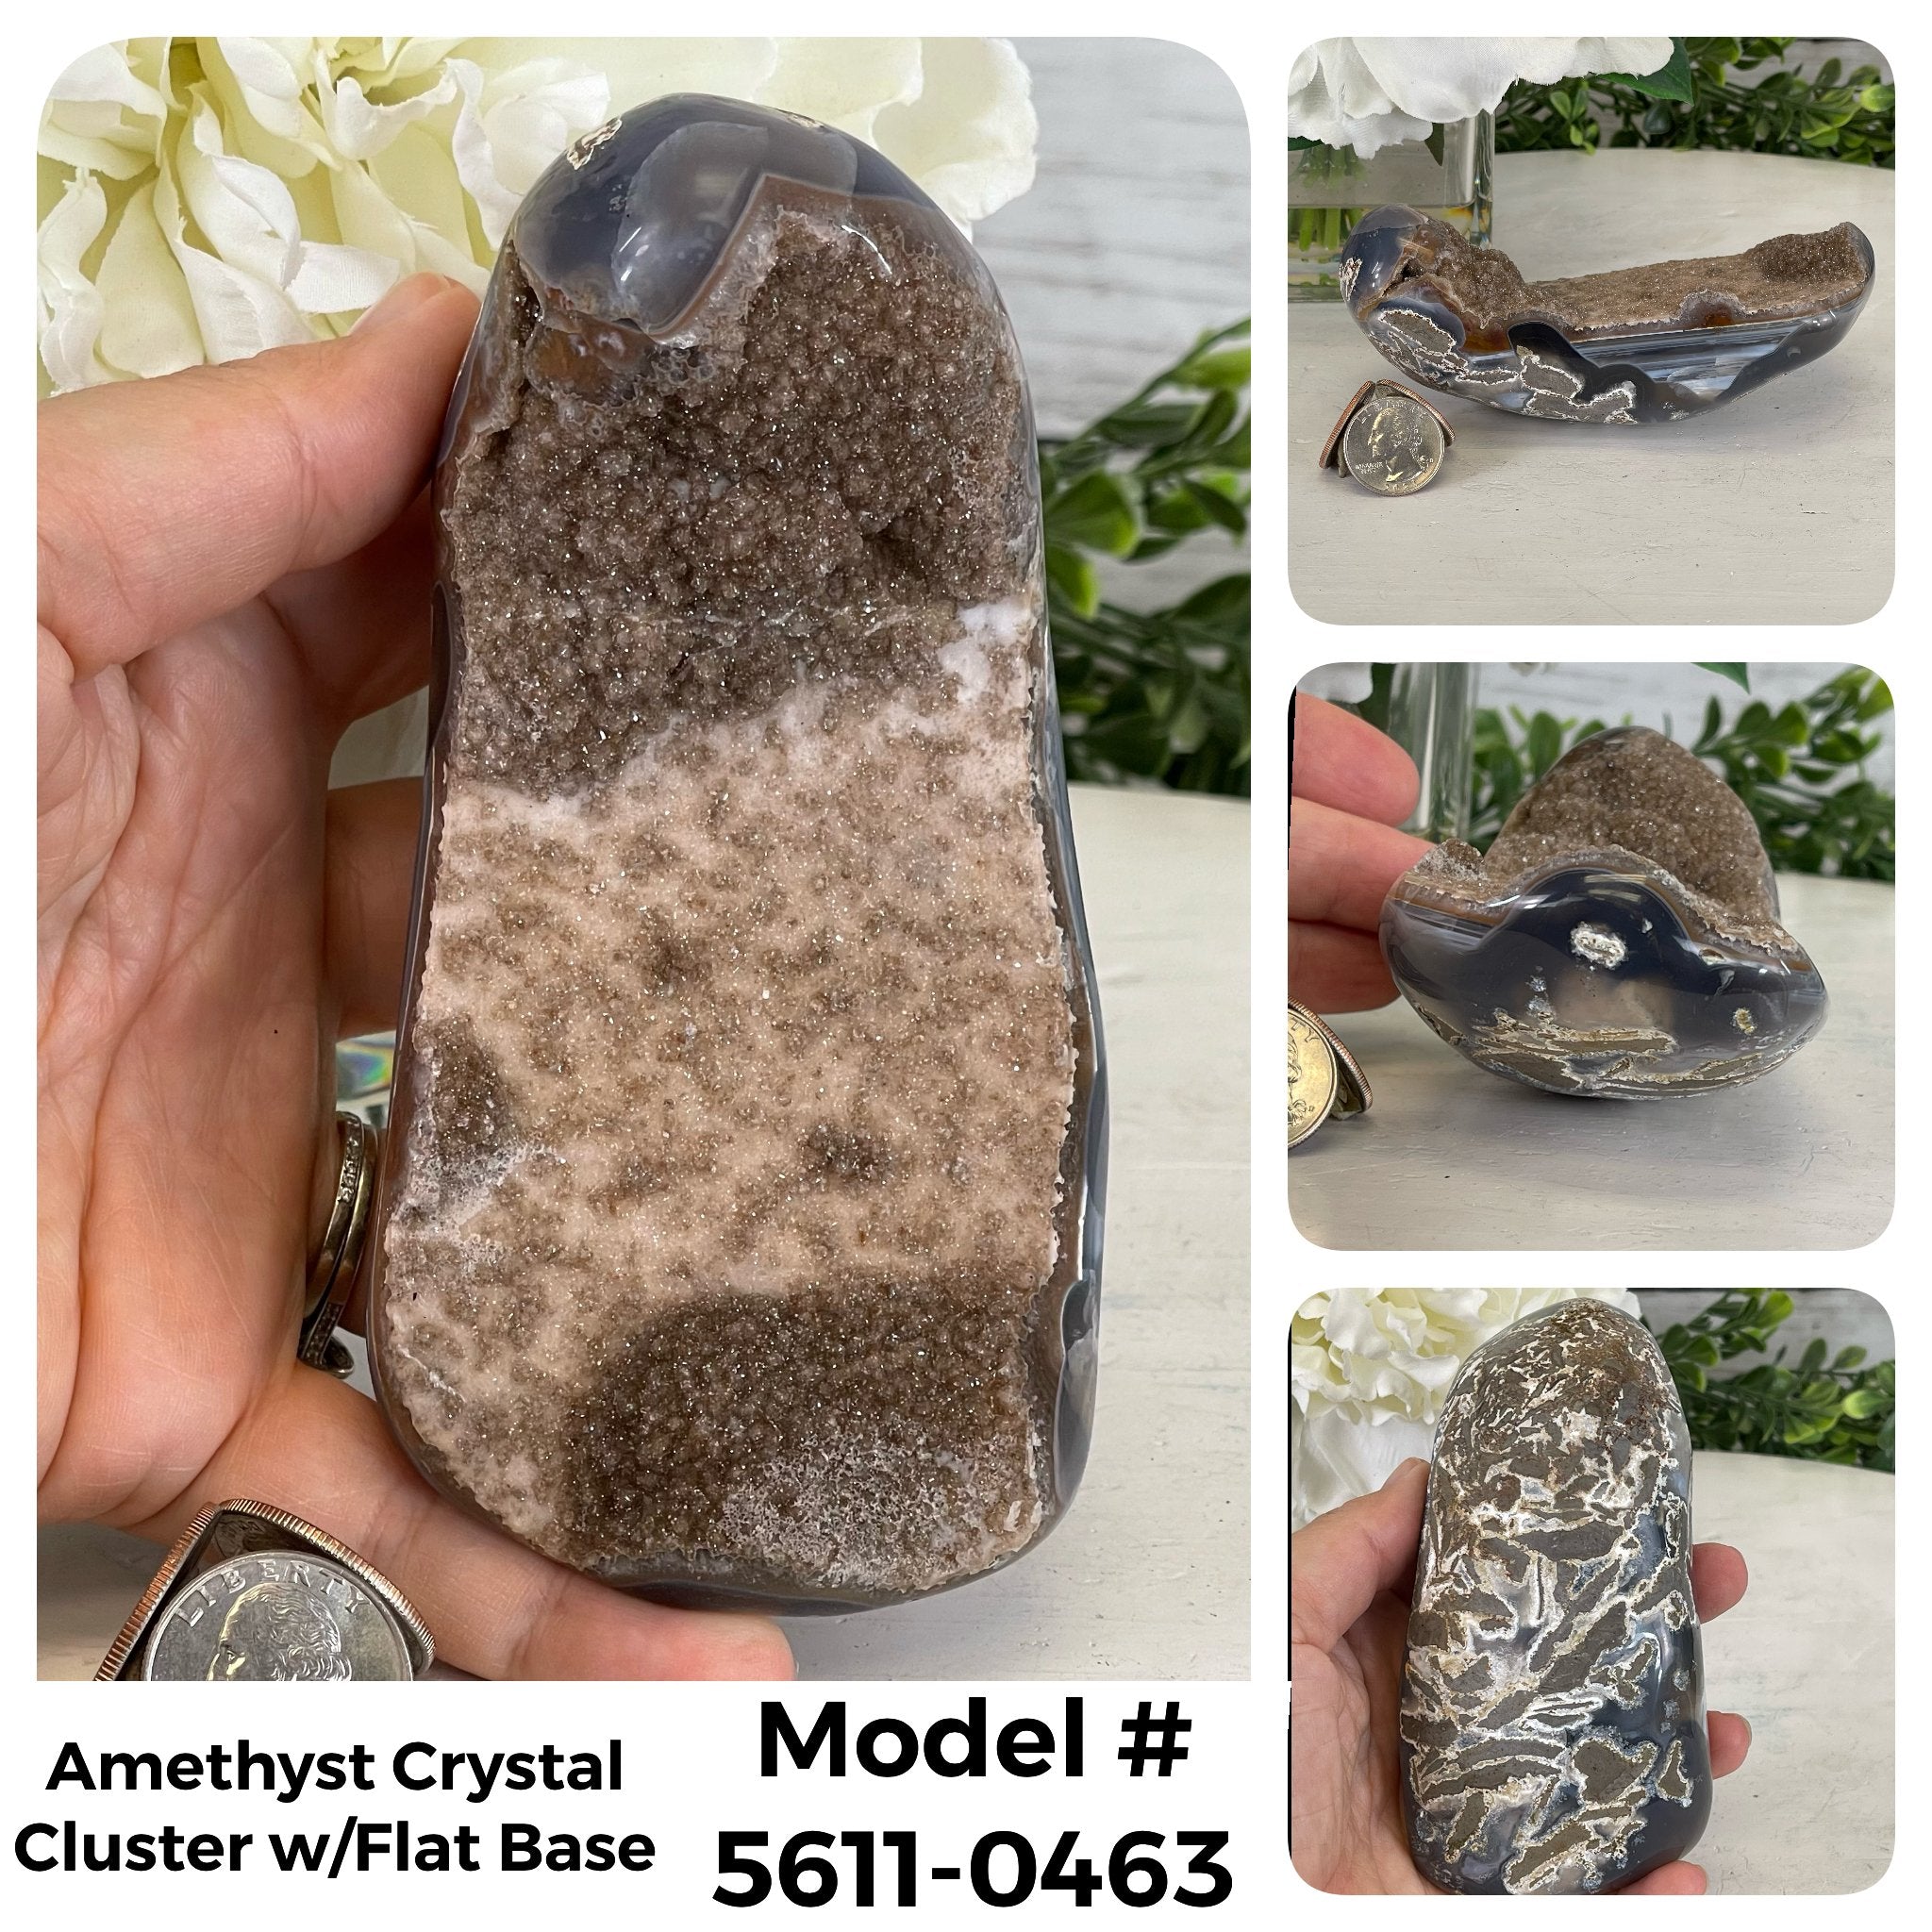 Small Super Quality Amethyst Crystal Cluster w/ flat base, Various Options #5611SQ - Brazil GemsBrazil GemsSmall Super Quality Amethyst Crystal Cluster w/ flat base, Various Options #5611SQSmall Clusters with Flat Bases5611-0463